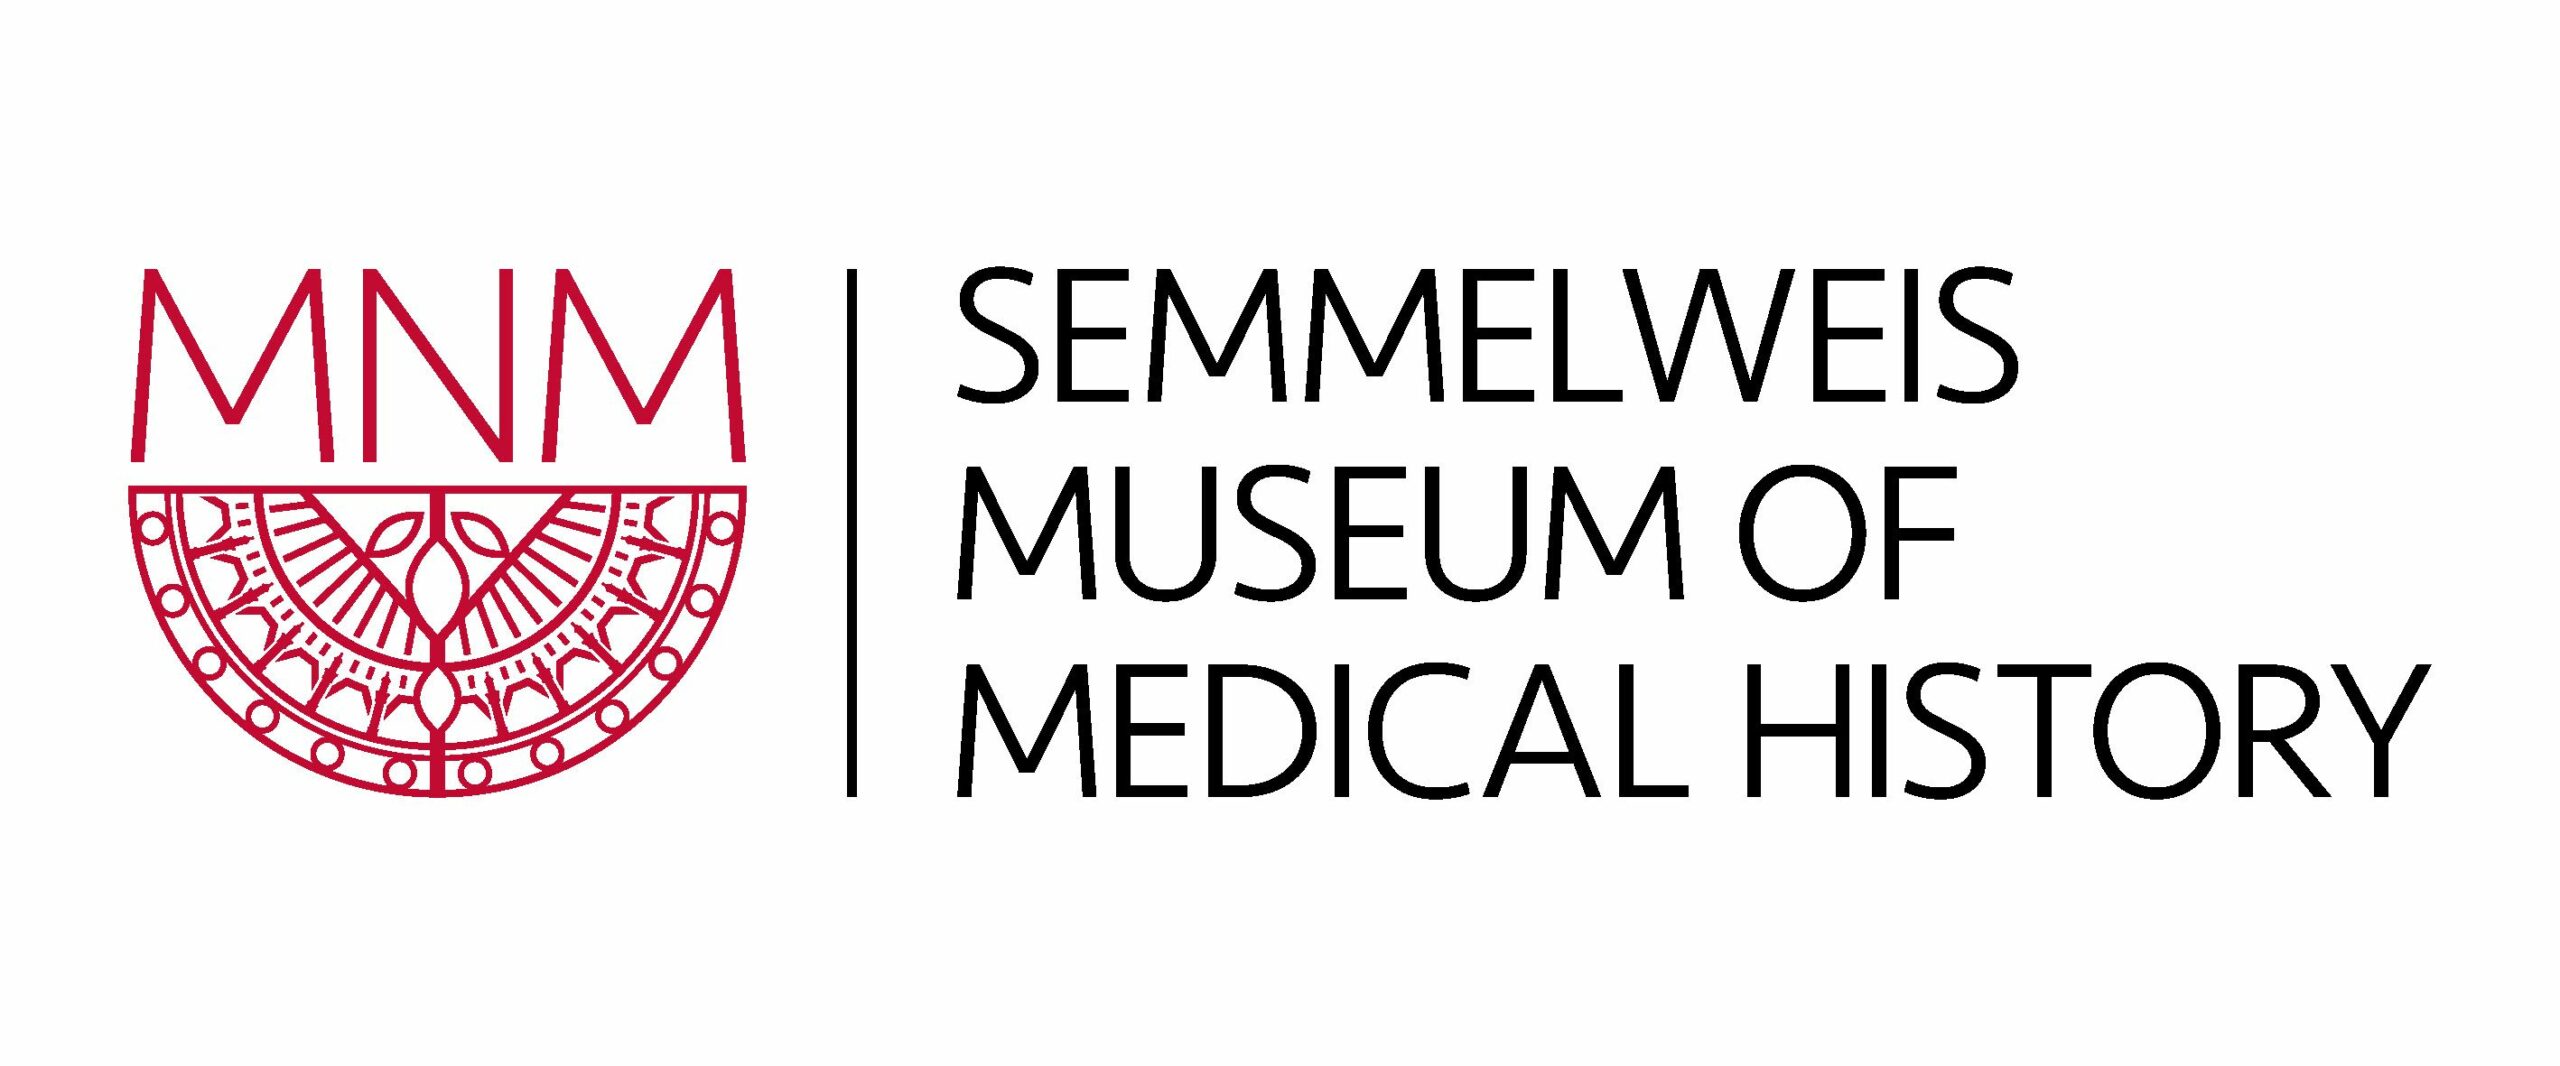 The logo of MNM Semmelweis Orvostörténeti Múzeum, links to the website of MNM Semmelweis Orvostörténeti Múzeum